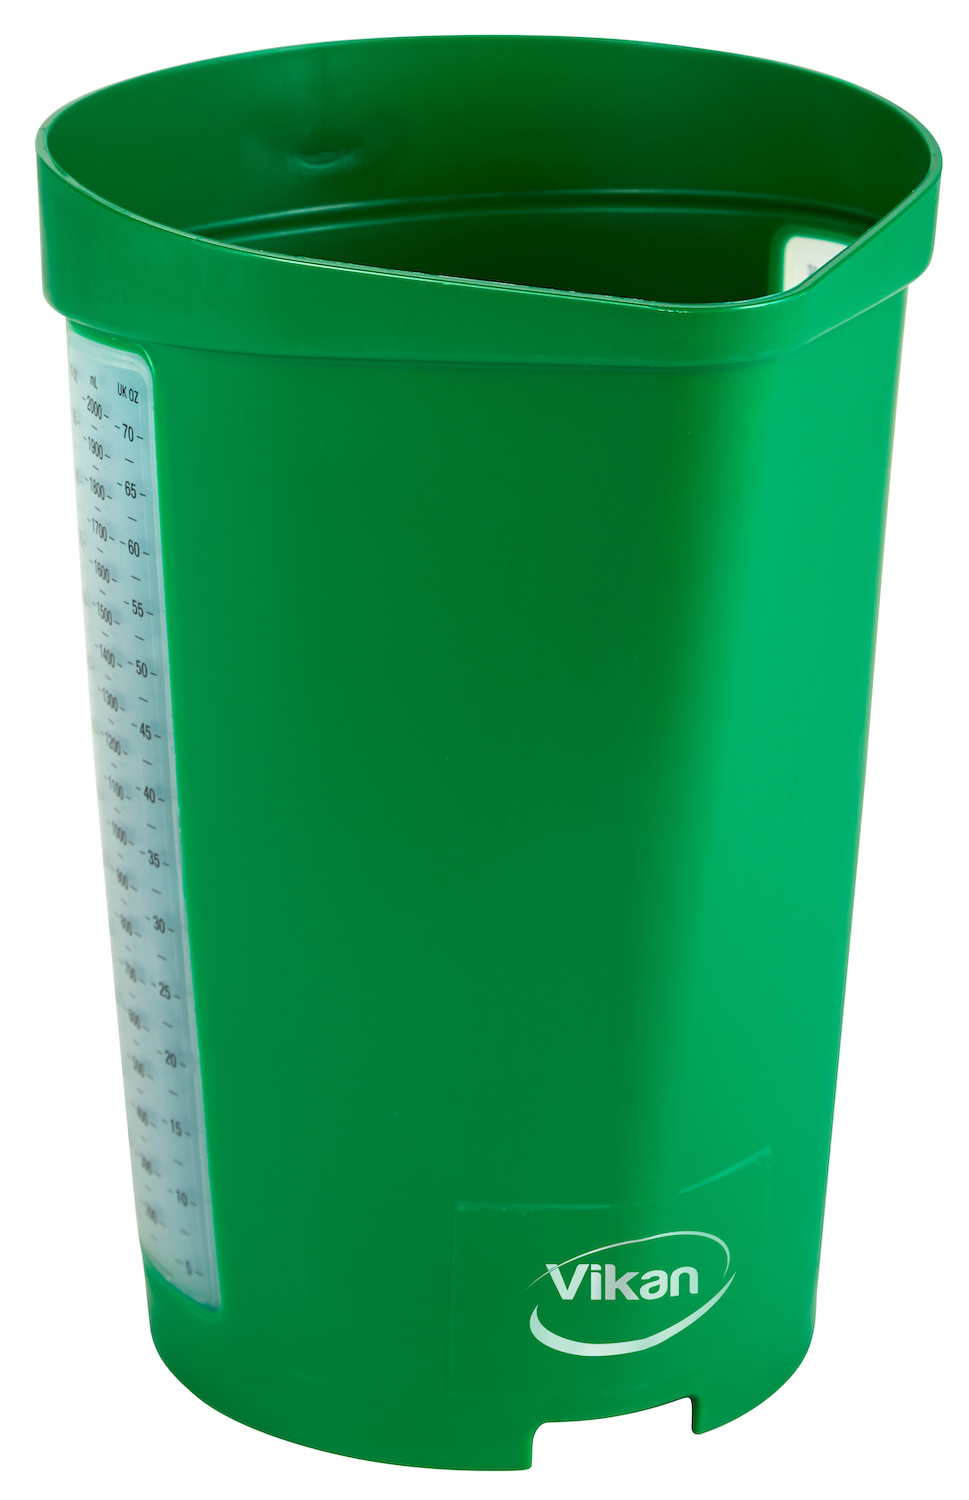 Measuring jug, 2 litre, , Green